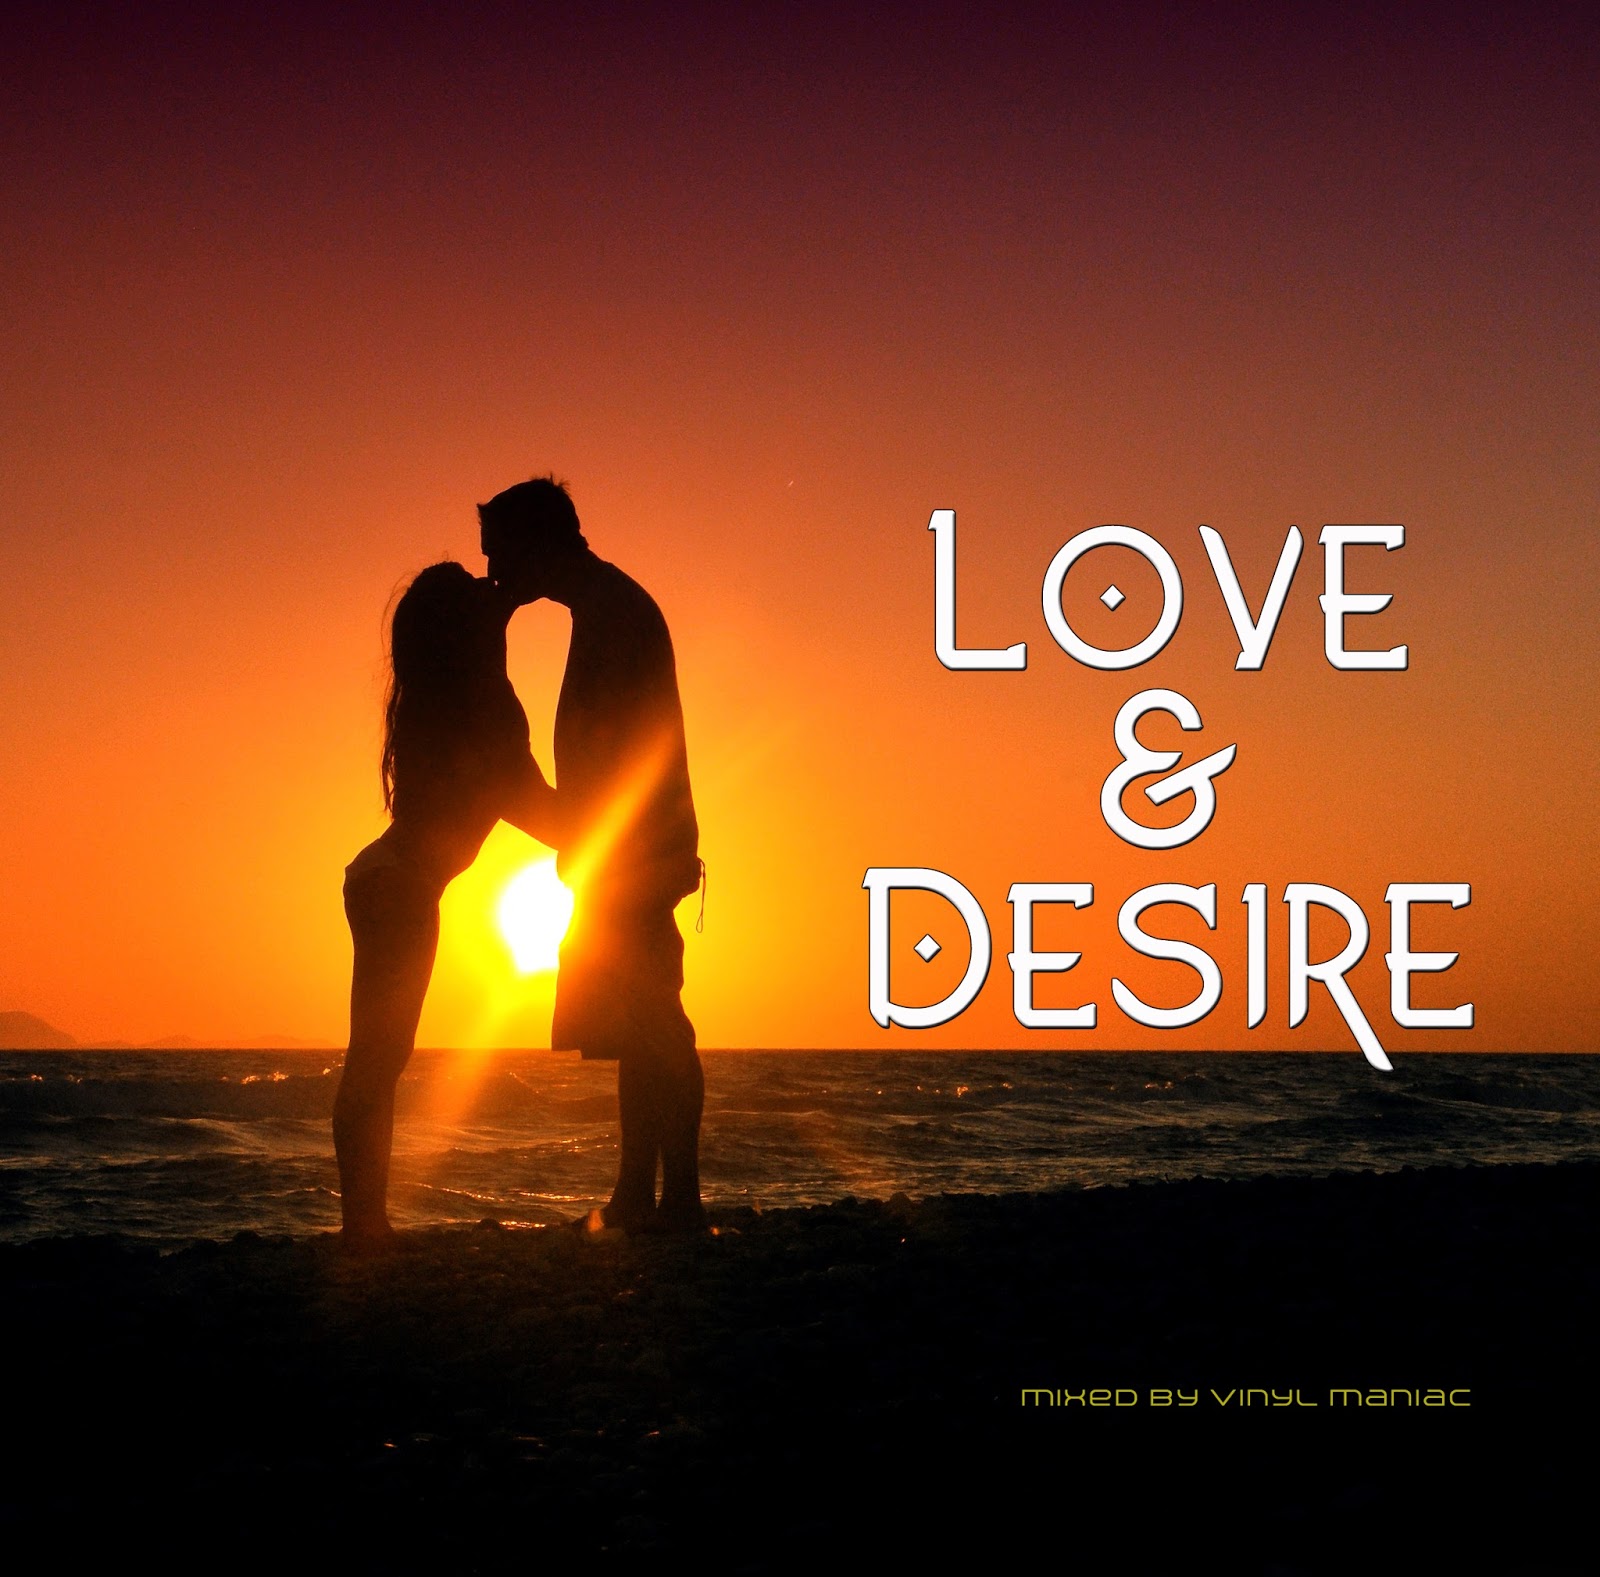 Desiree desire